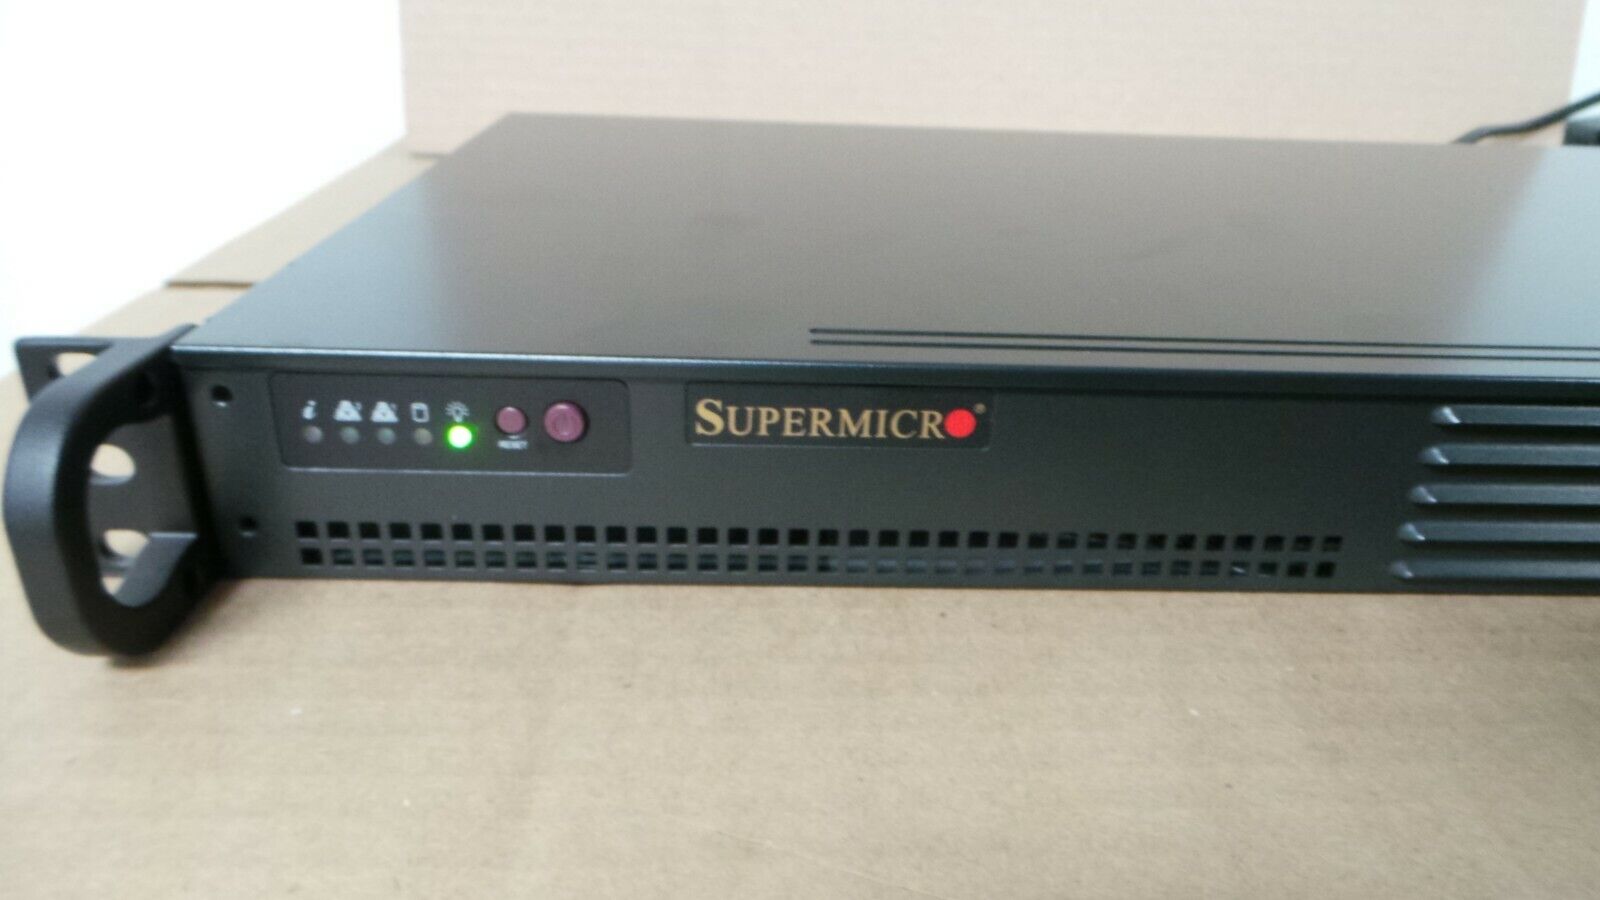 SUPERMICRO  sys-5015a  ehf ATOM  D510  4GB MEMORY  128GB SSD  FIREWALL APPLIANCE